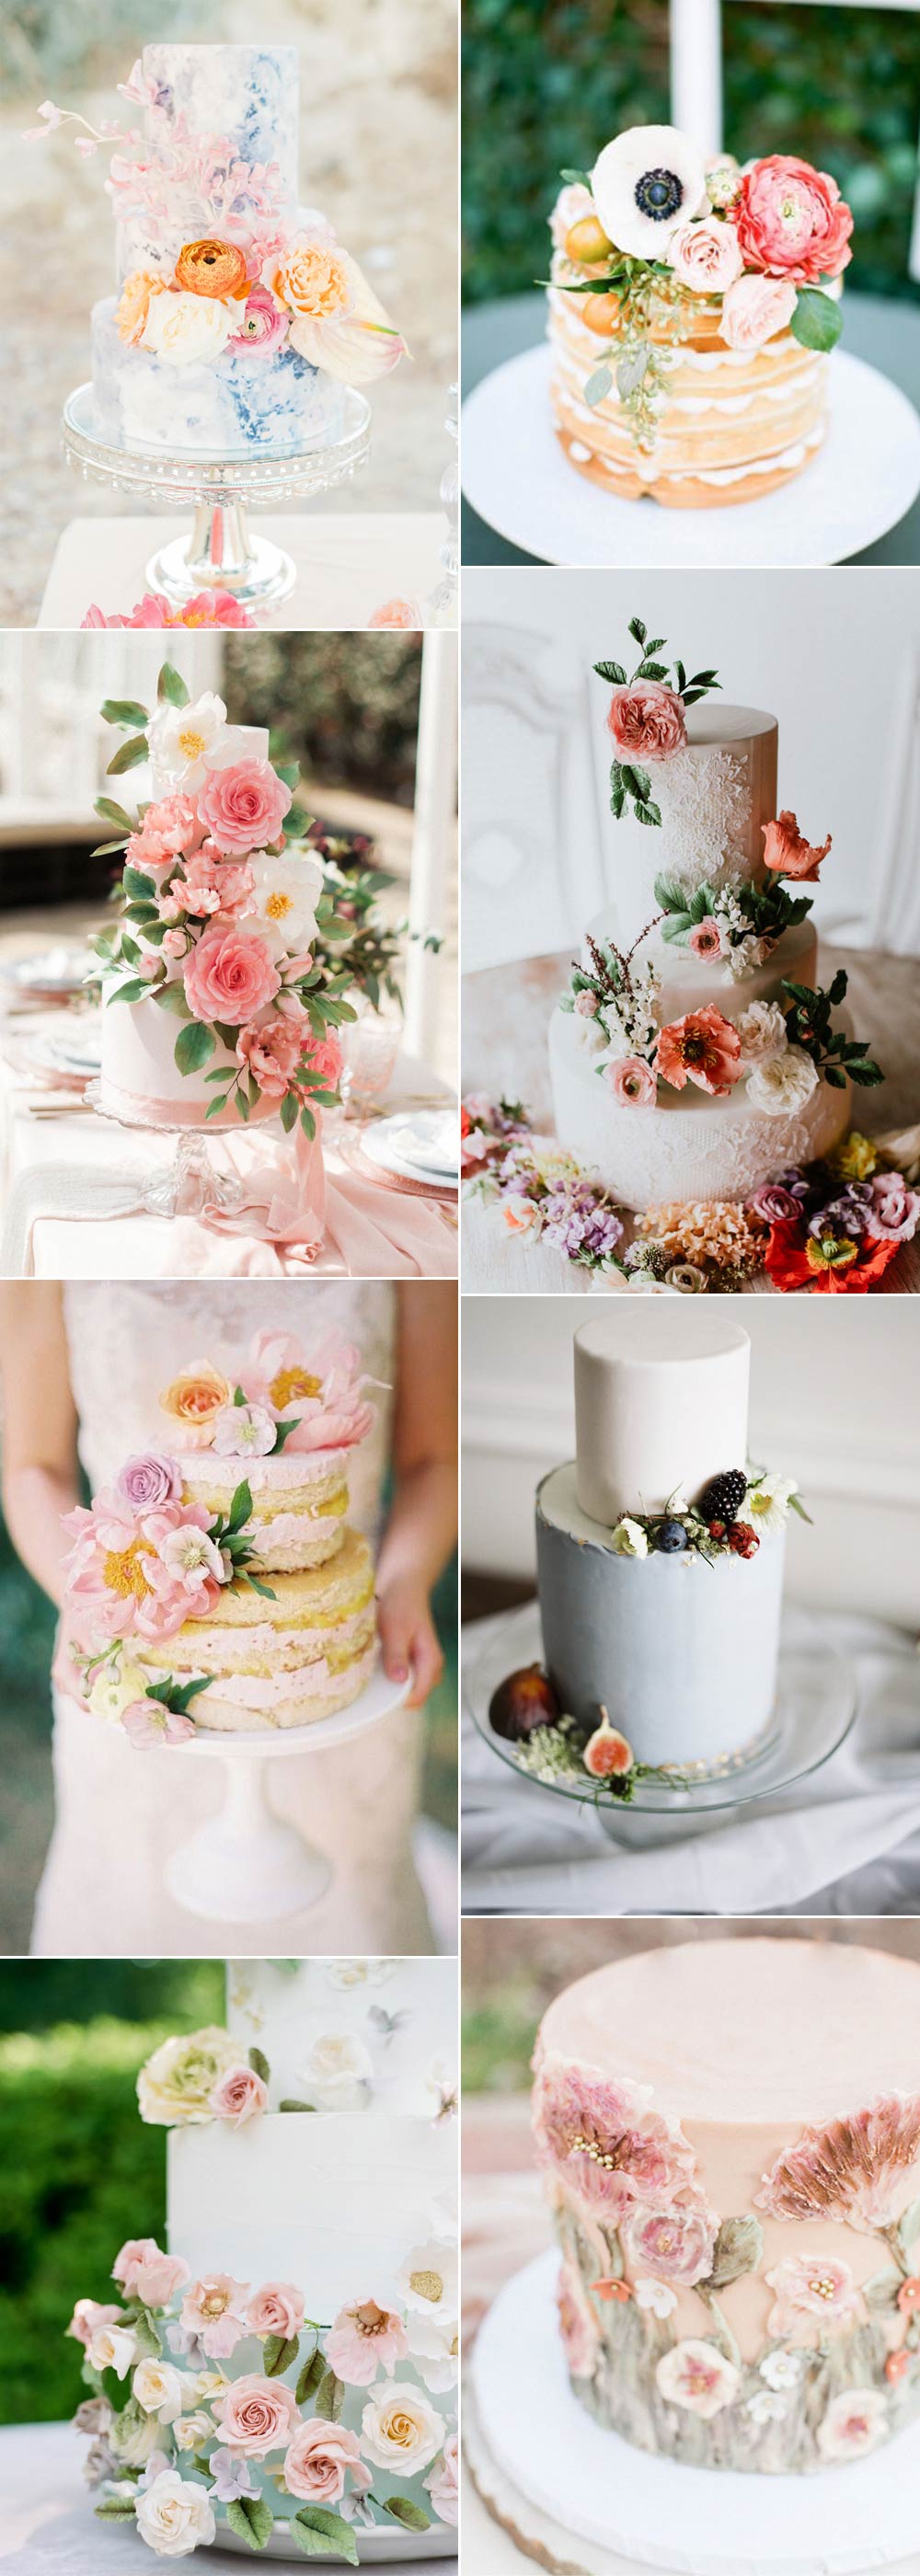 Floral wedding cake inspiration for spring weddings